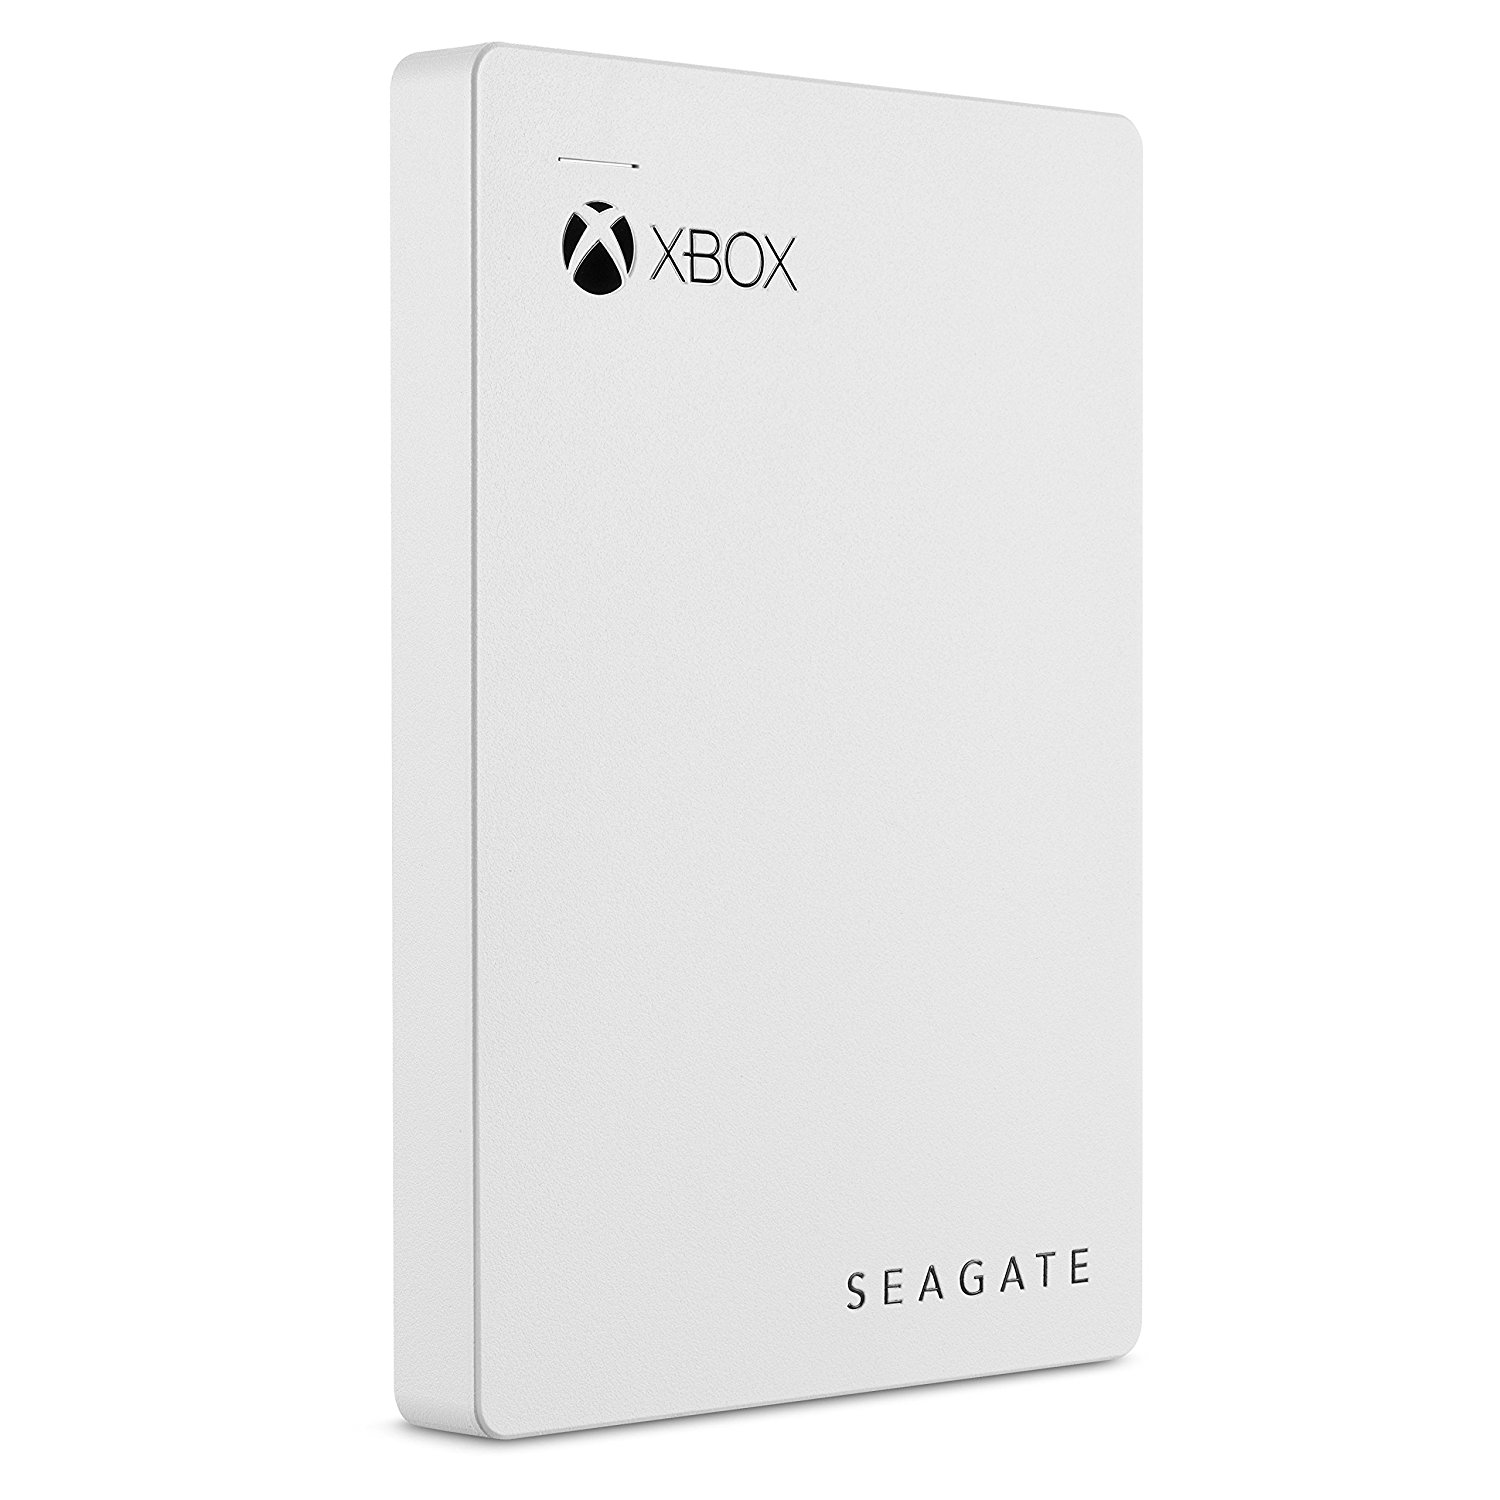 Hard Disk Portabil Seagate Game Drive pentru Xbox 1TB USB 3.0 Alb